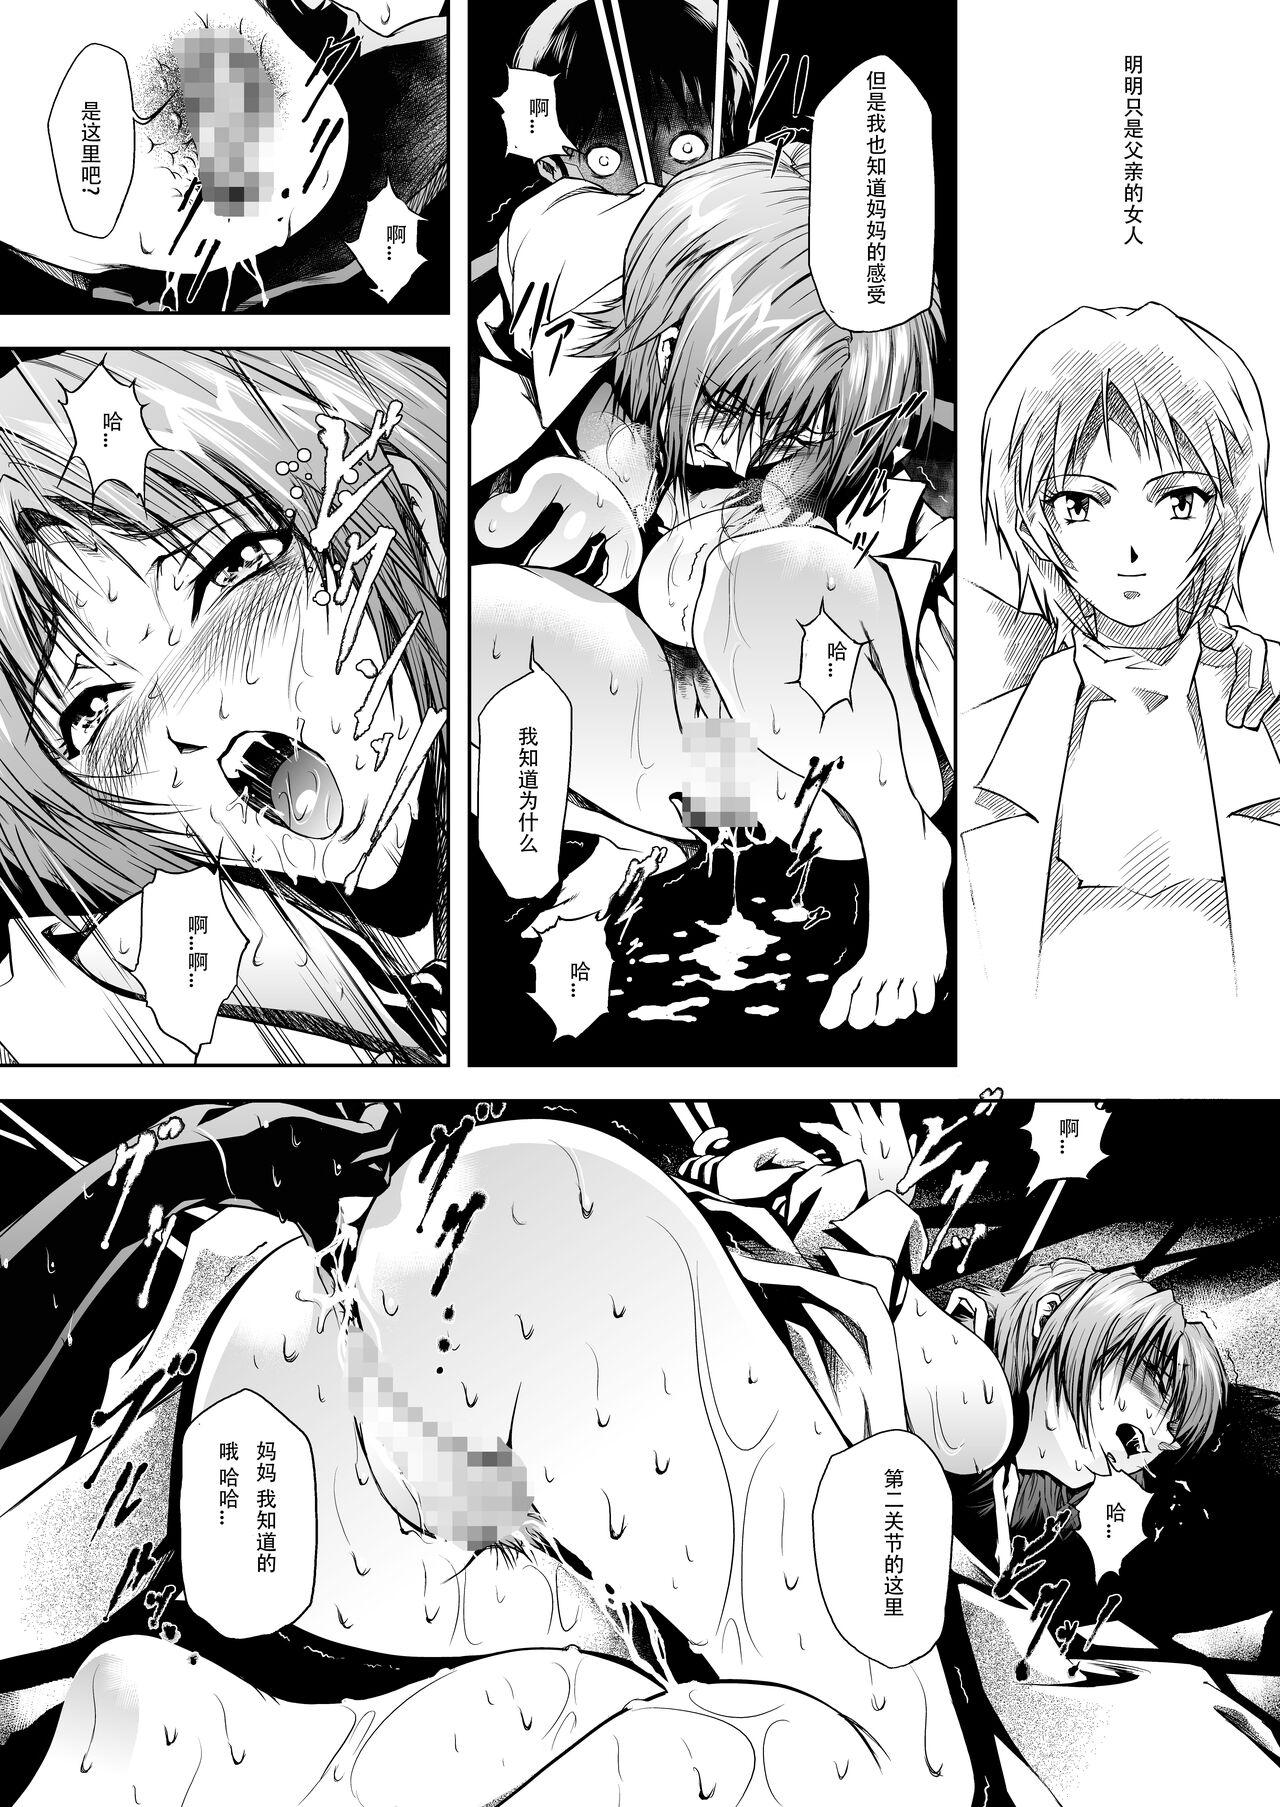 Spooning Bosei no Shinjitsu - Neon genesis evangelion Animation - Page 8